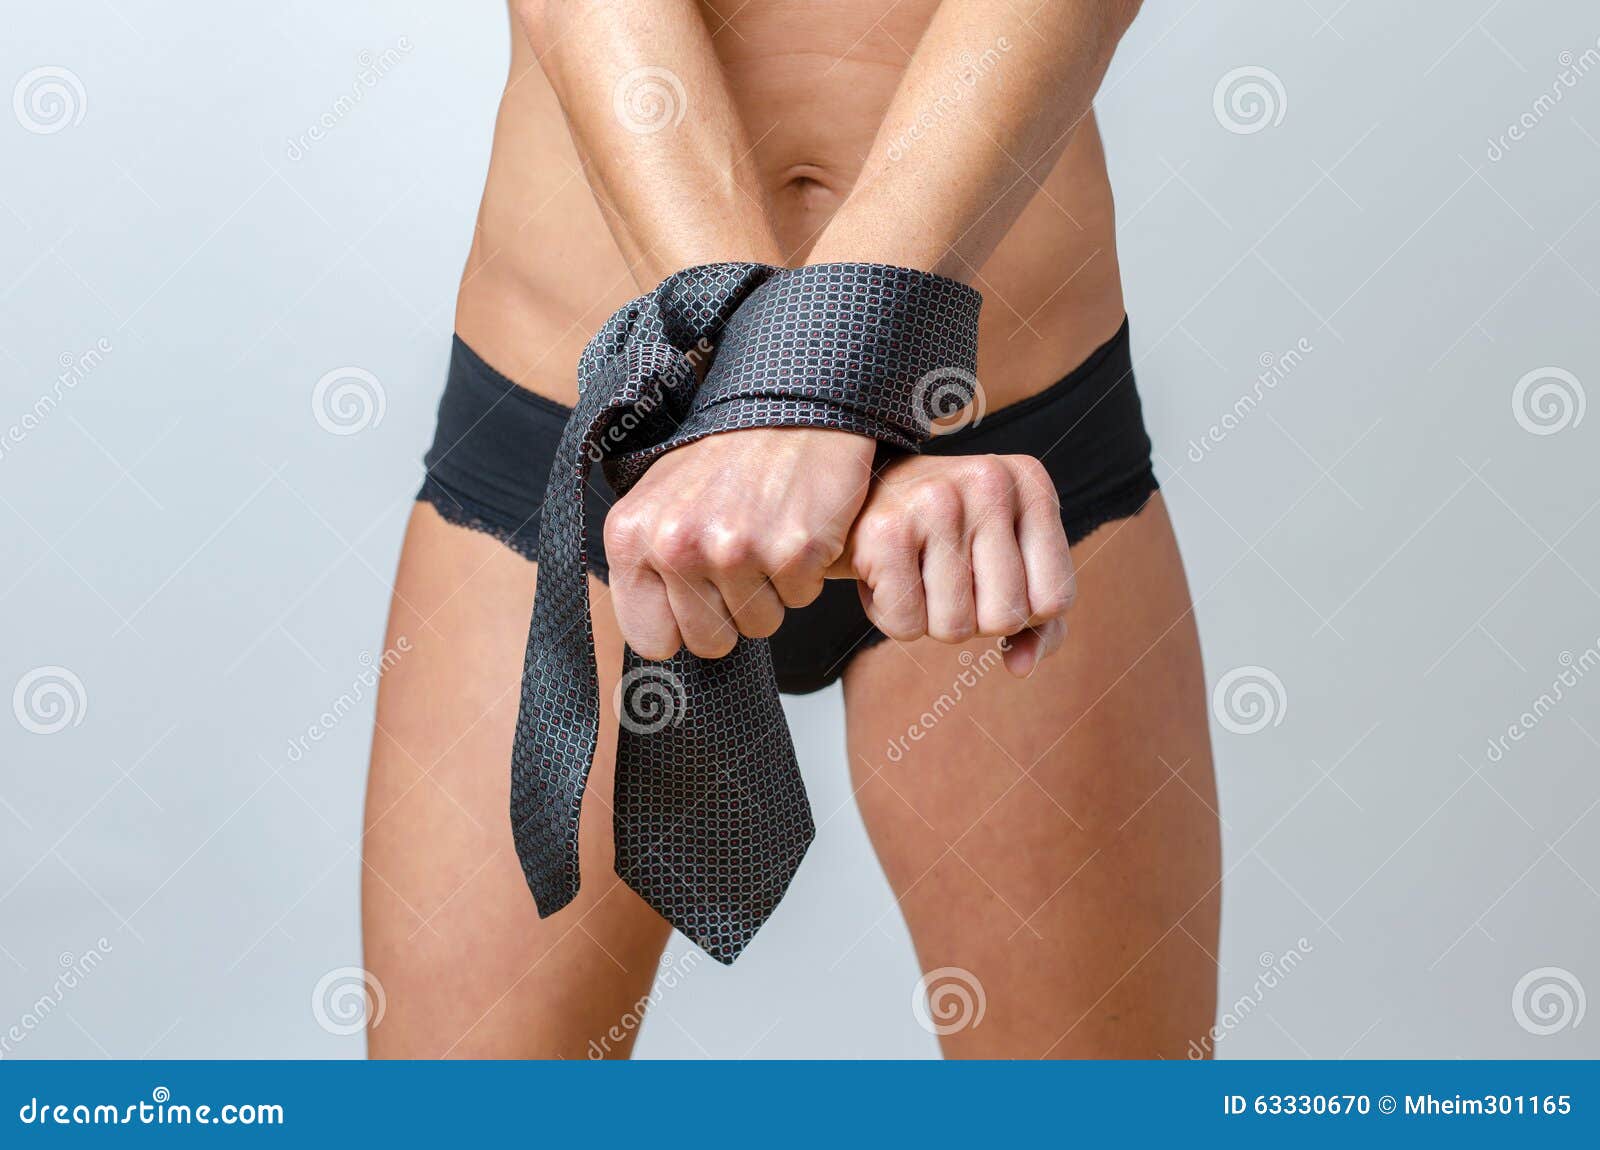 Woman in bondage stock photo photo